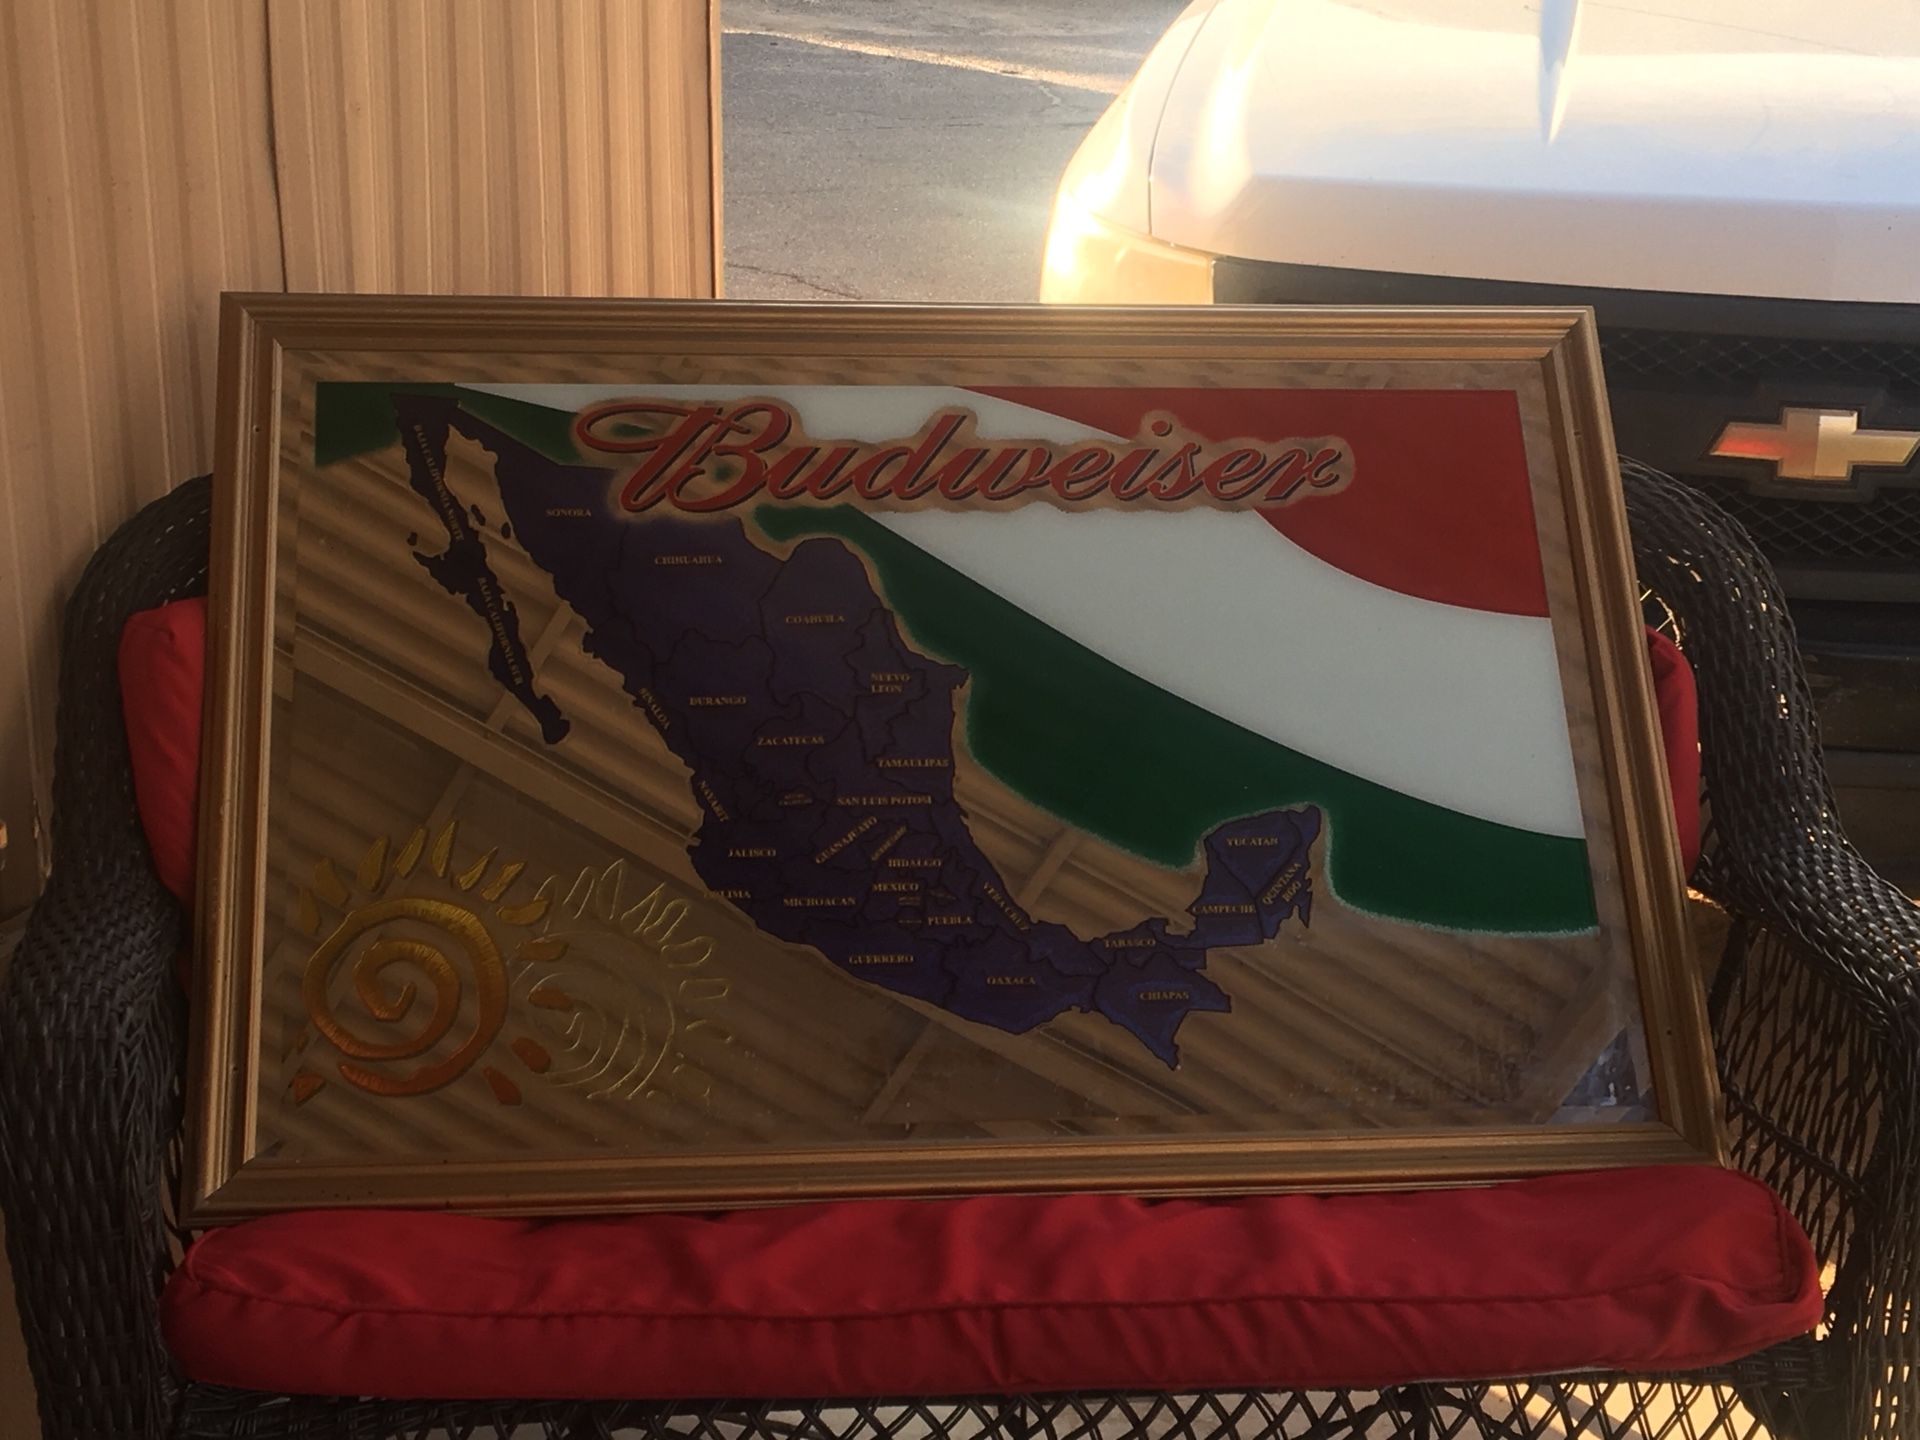 Budweiser/Mexico mirror